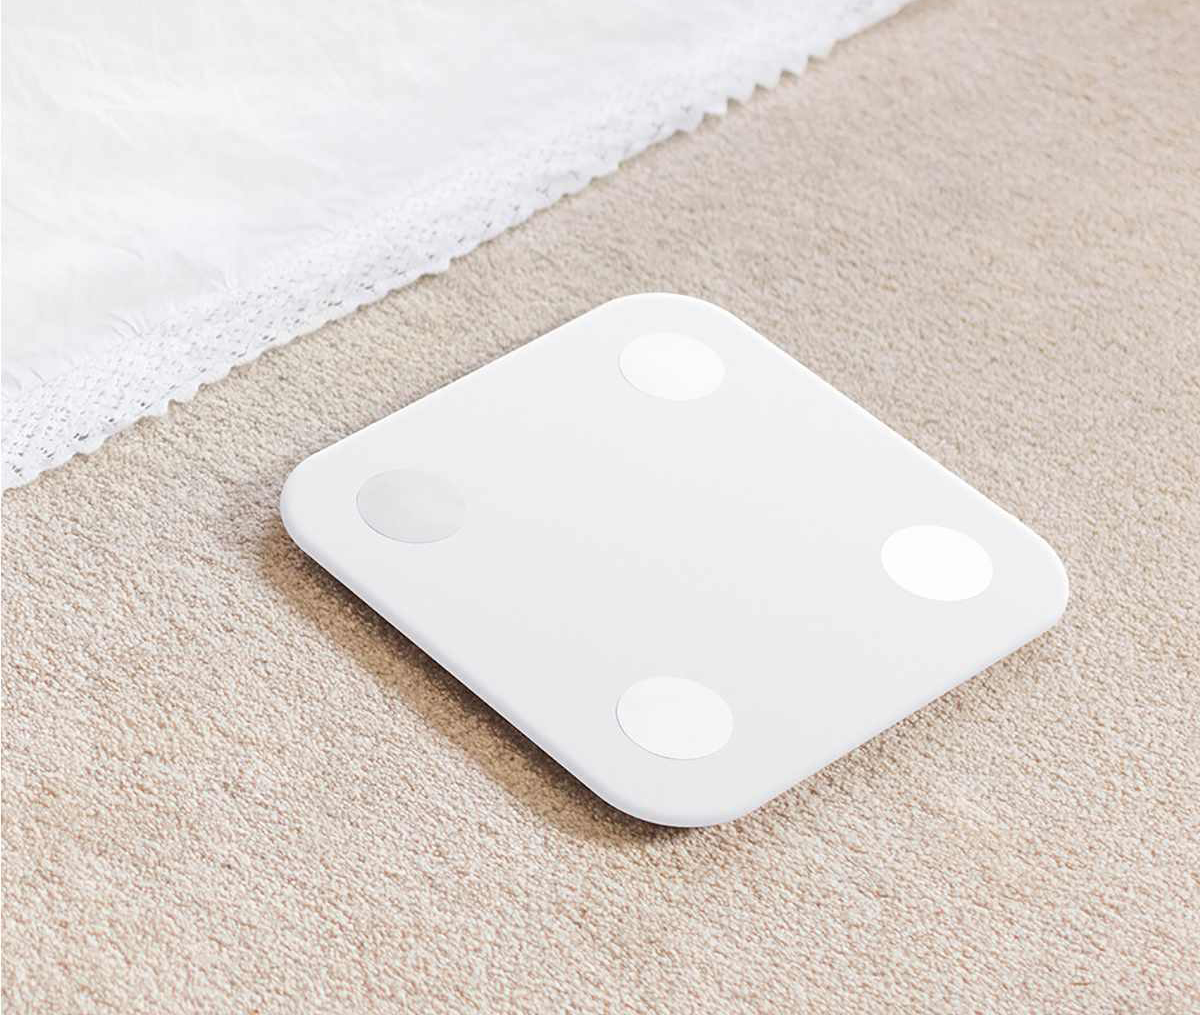 Global Original Xiaomi MIJIA Mi Body Composition Scale 2 Smart Fat Weight Scale Bathroom LED Screen